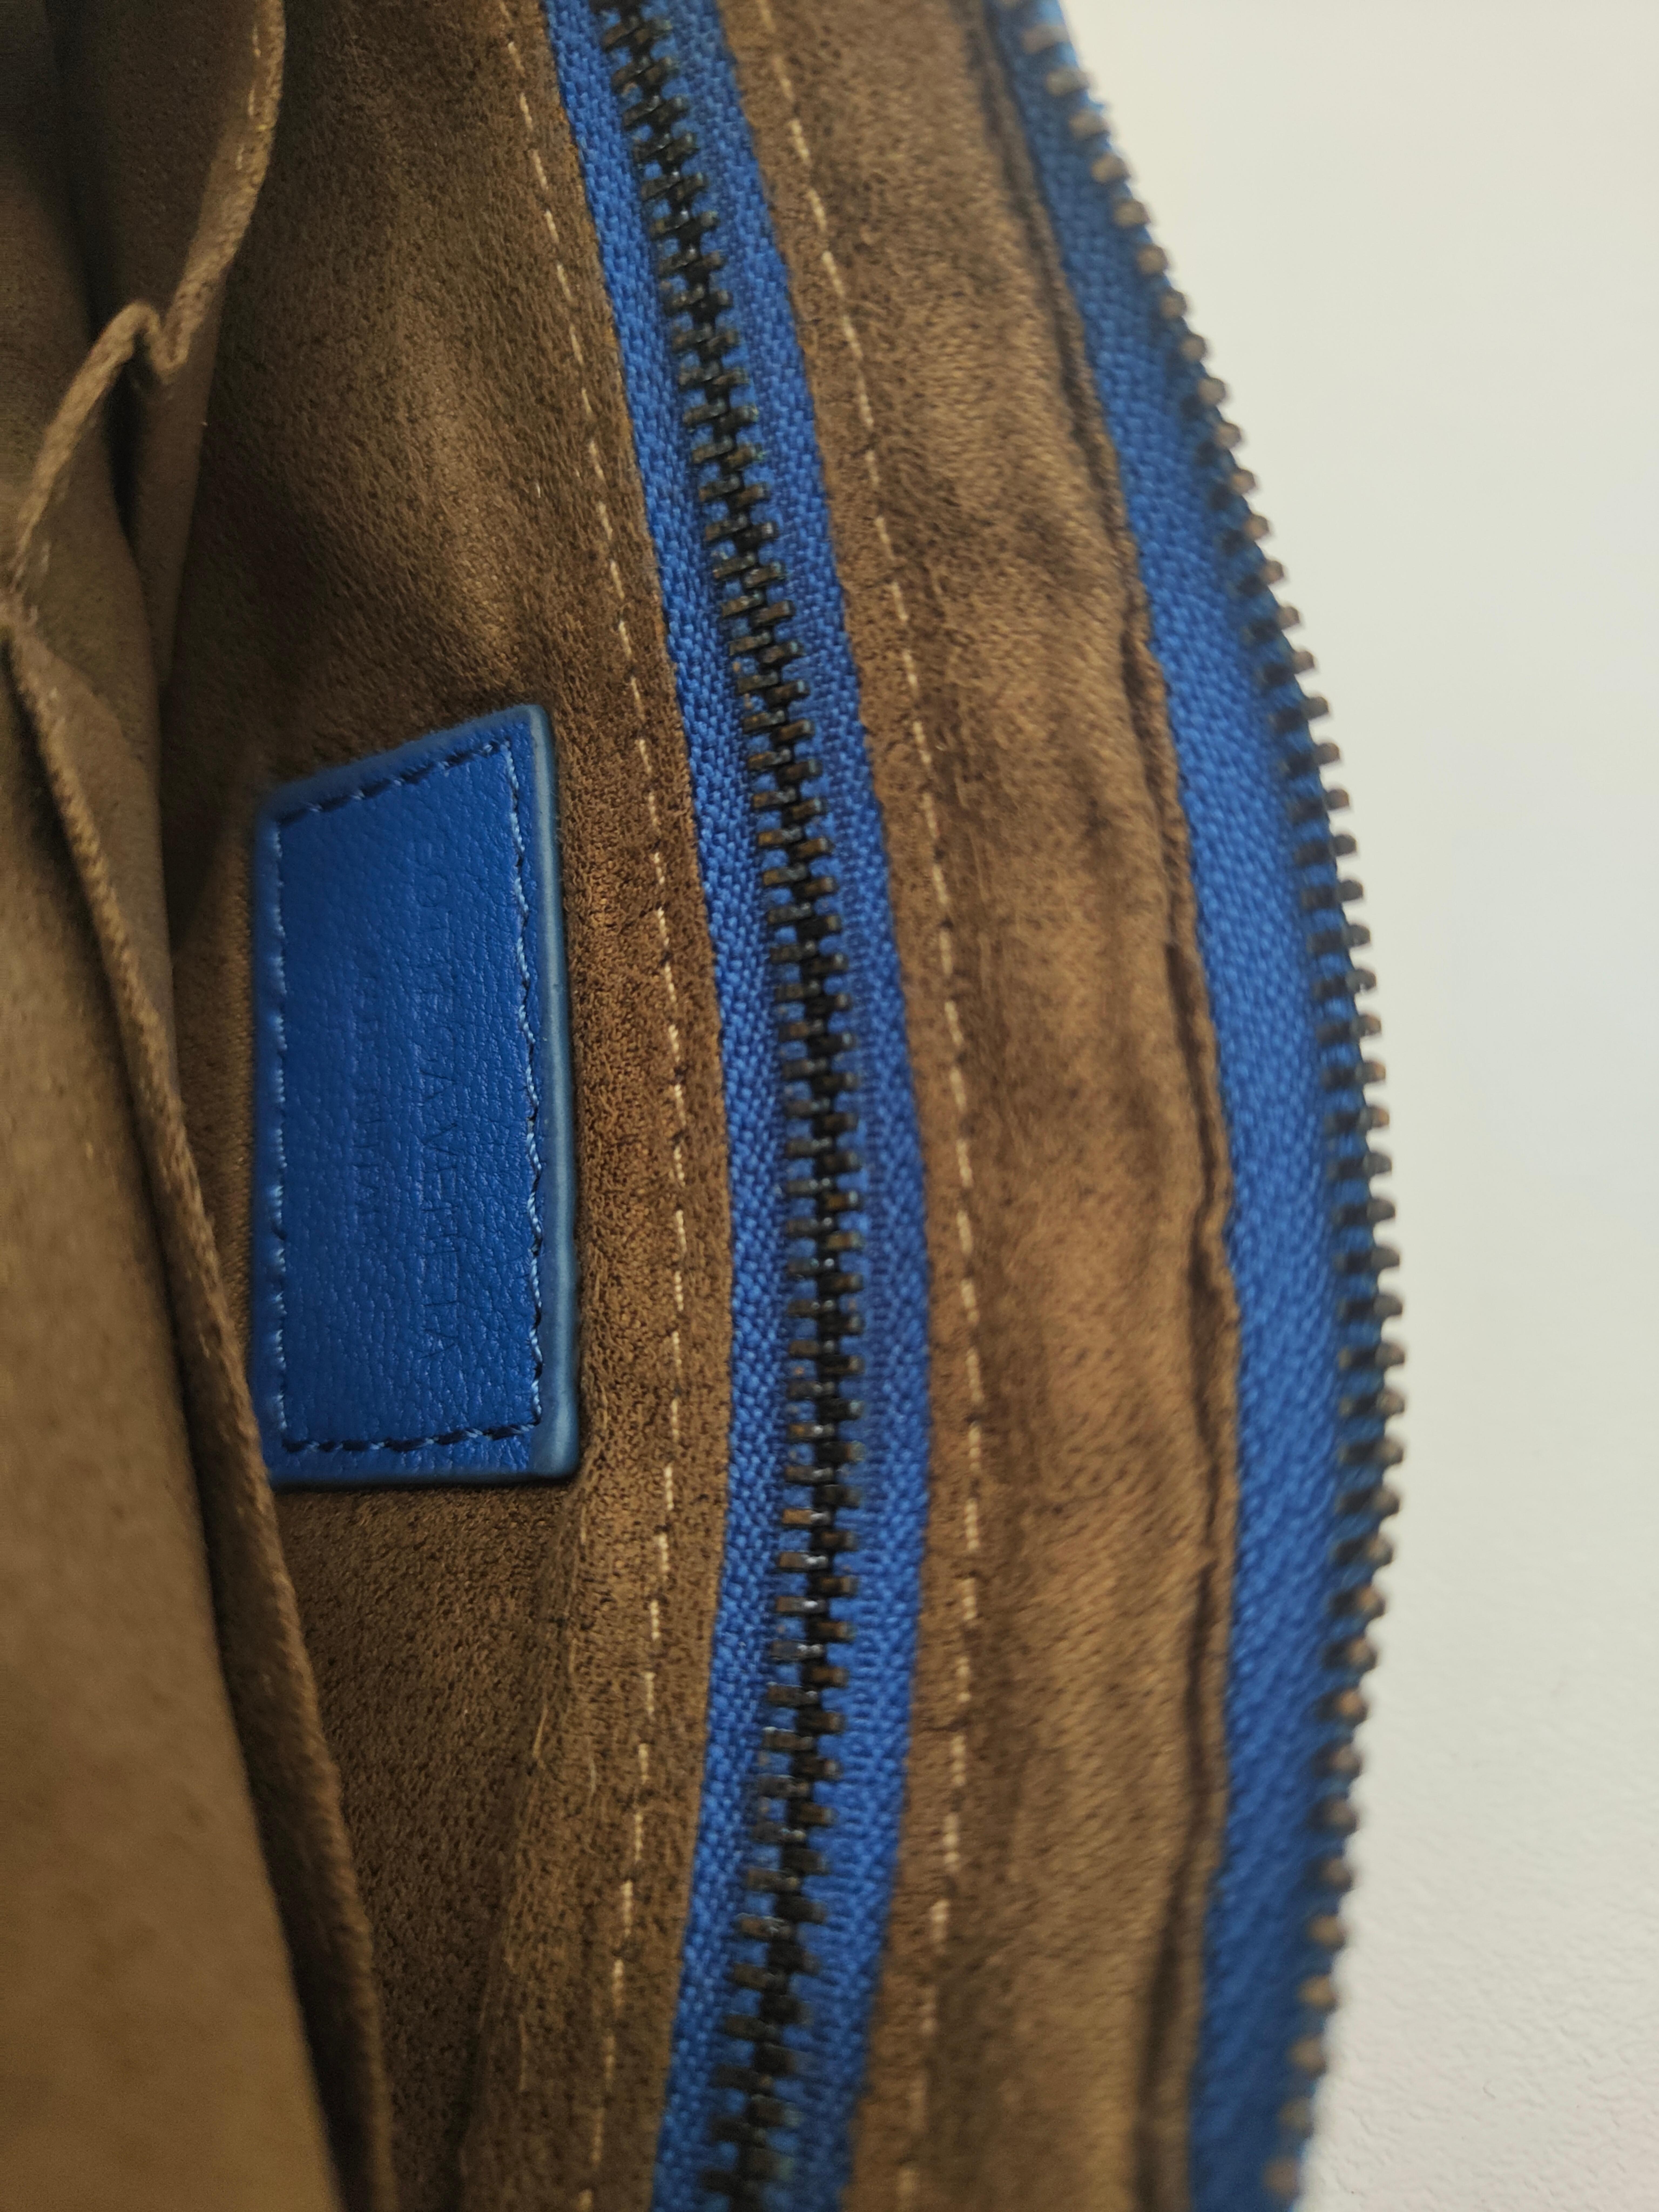 Women's or Men's Botttega Veneta blue leather clutch wallet